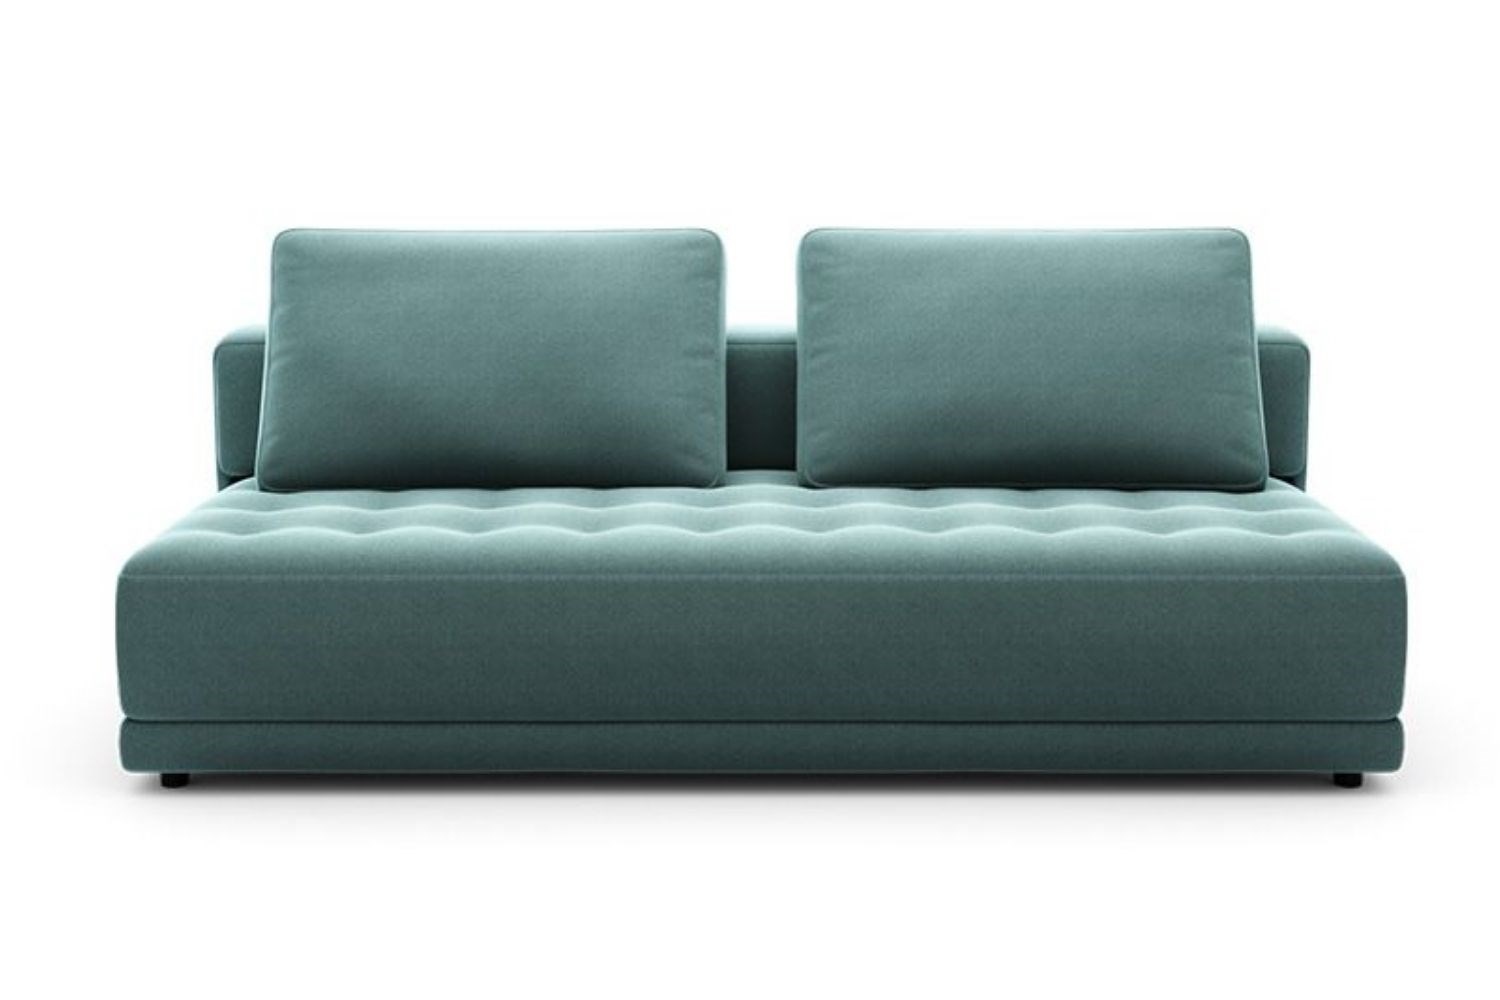 sofa bed dimensions australia